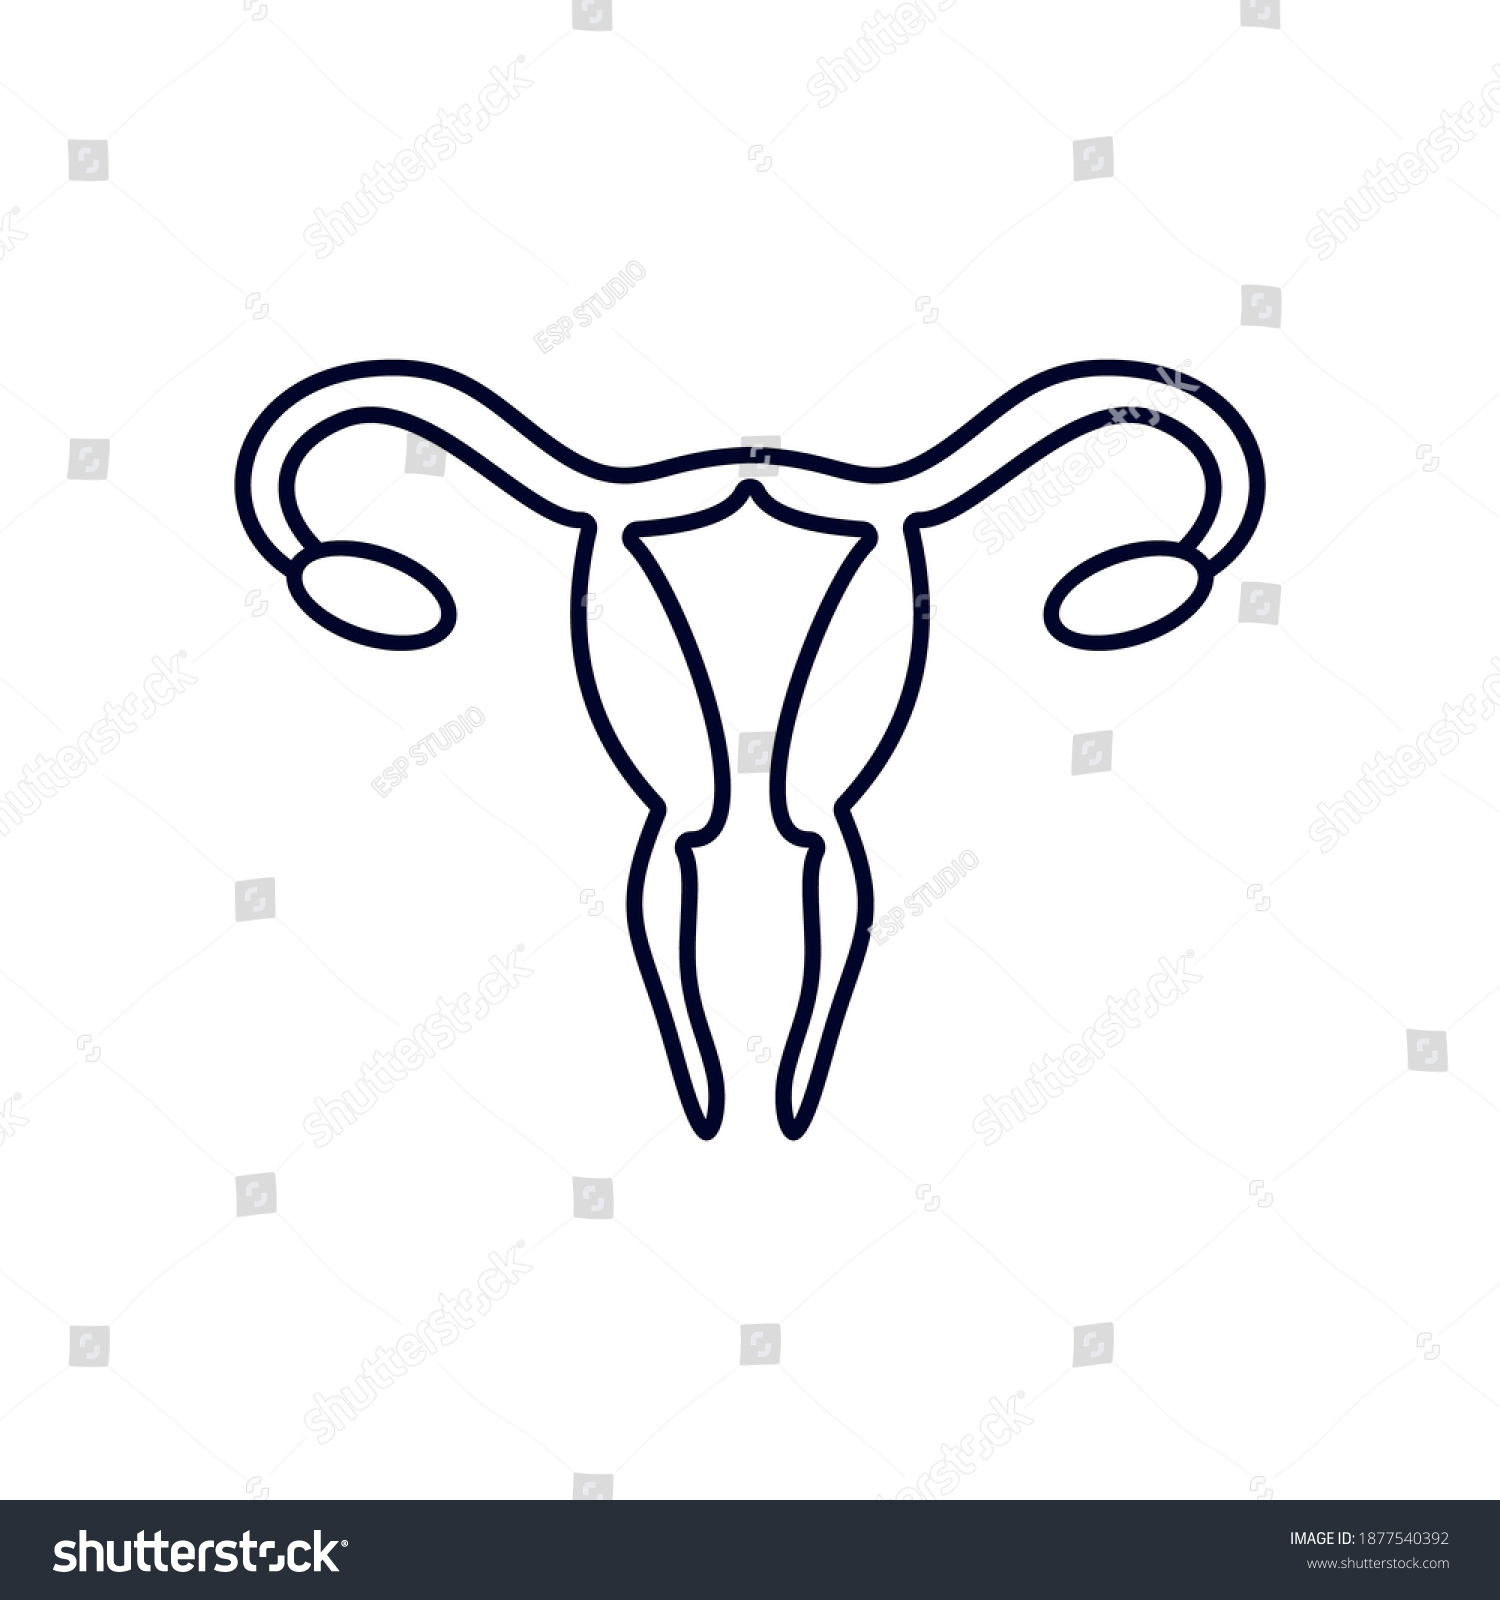 Female Reproductive Organs Logo Design Vector Vetor Stock Livre De Direitos 1877540392 6804